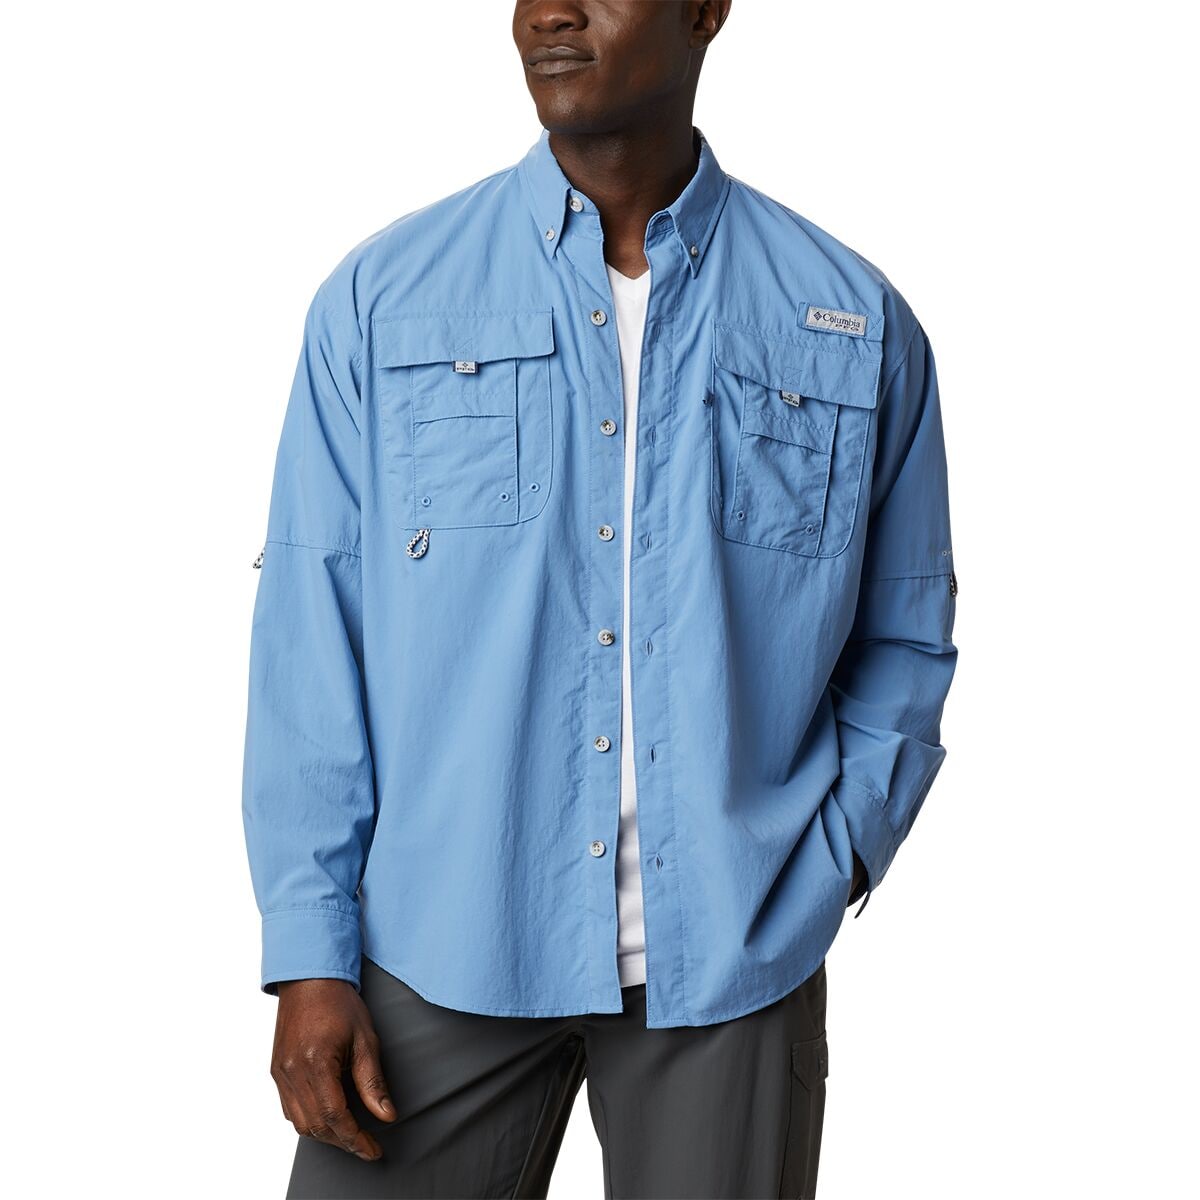 Bahama II Long-Sleeve Shirt - Men